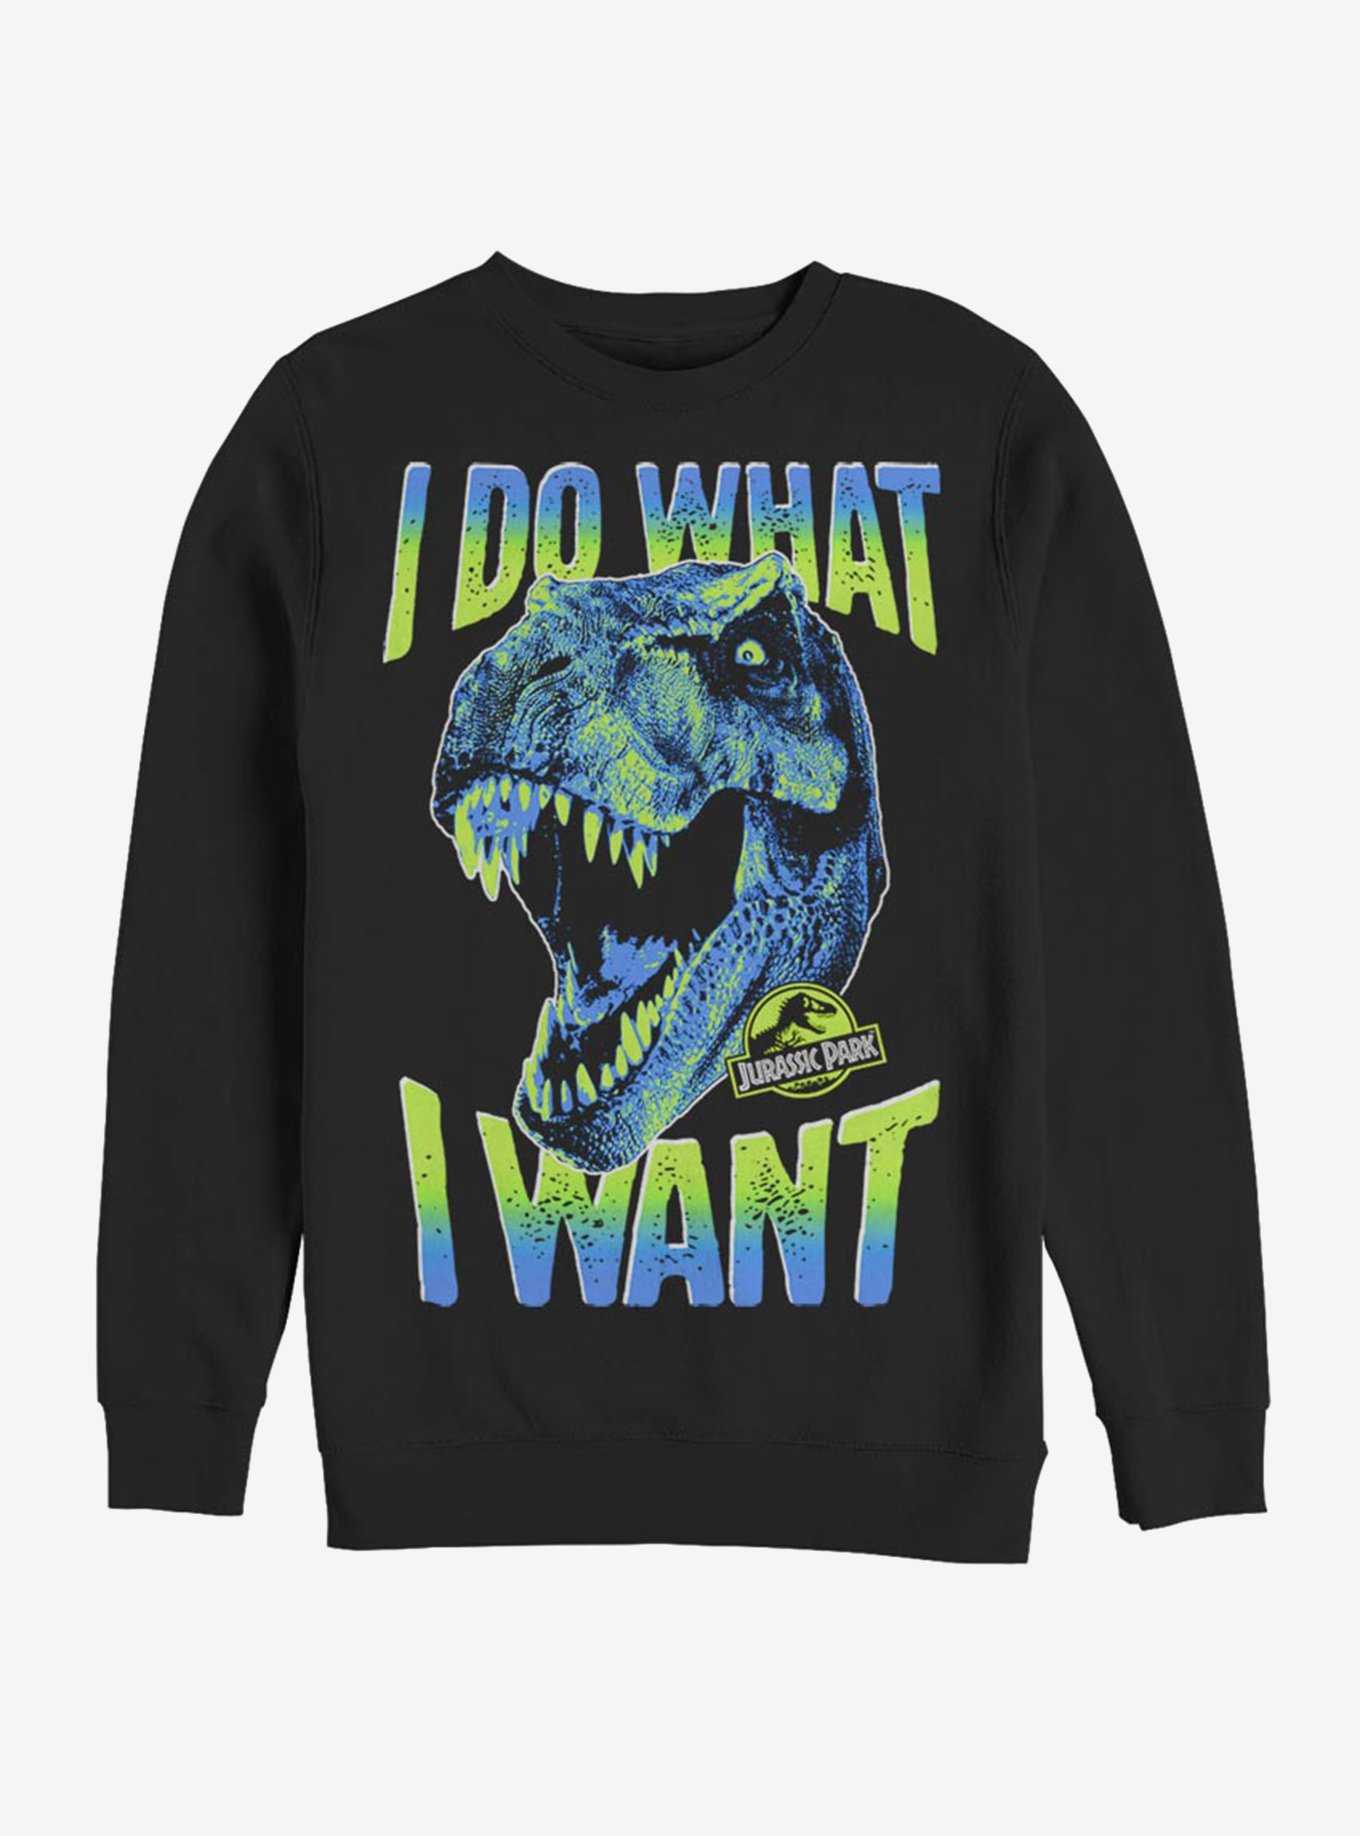 Jurassic Park What I Want Sweatshirt, , hi-res